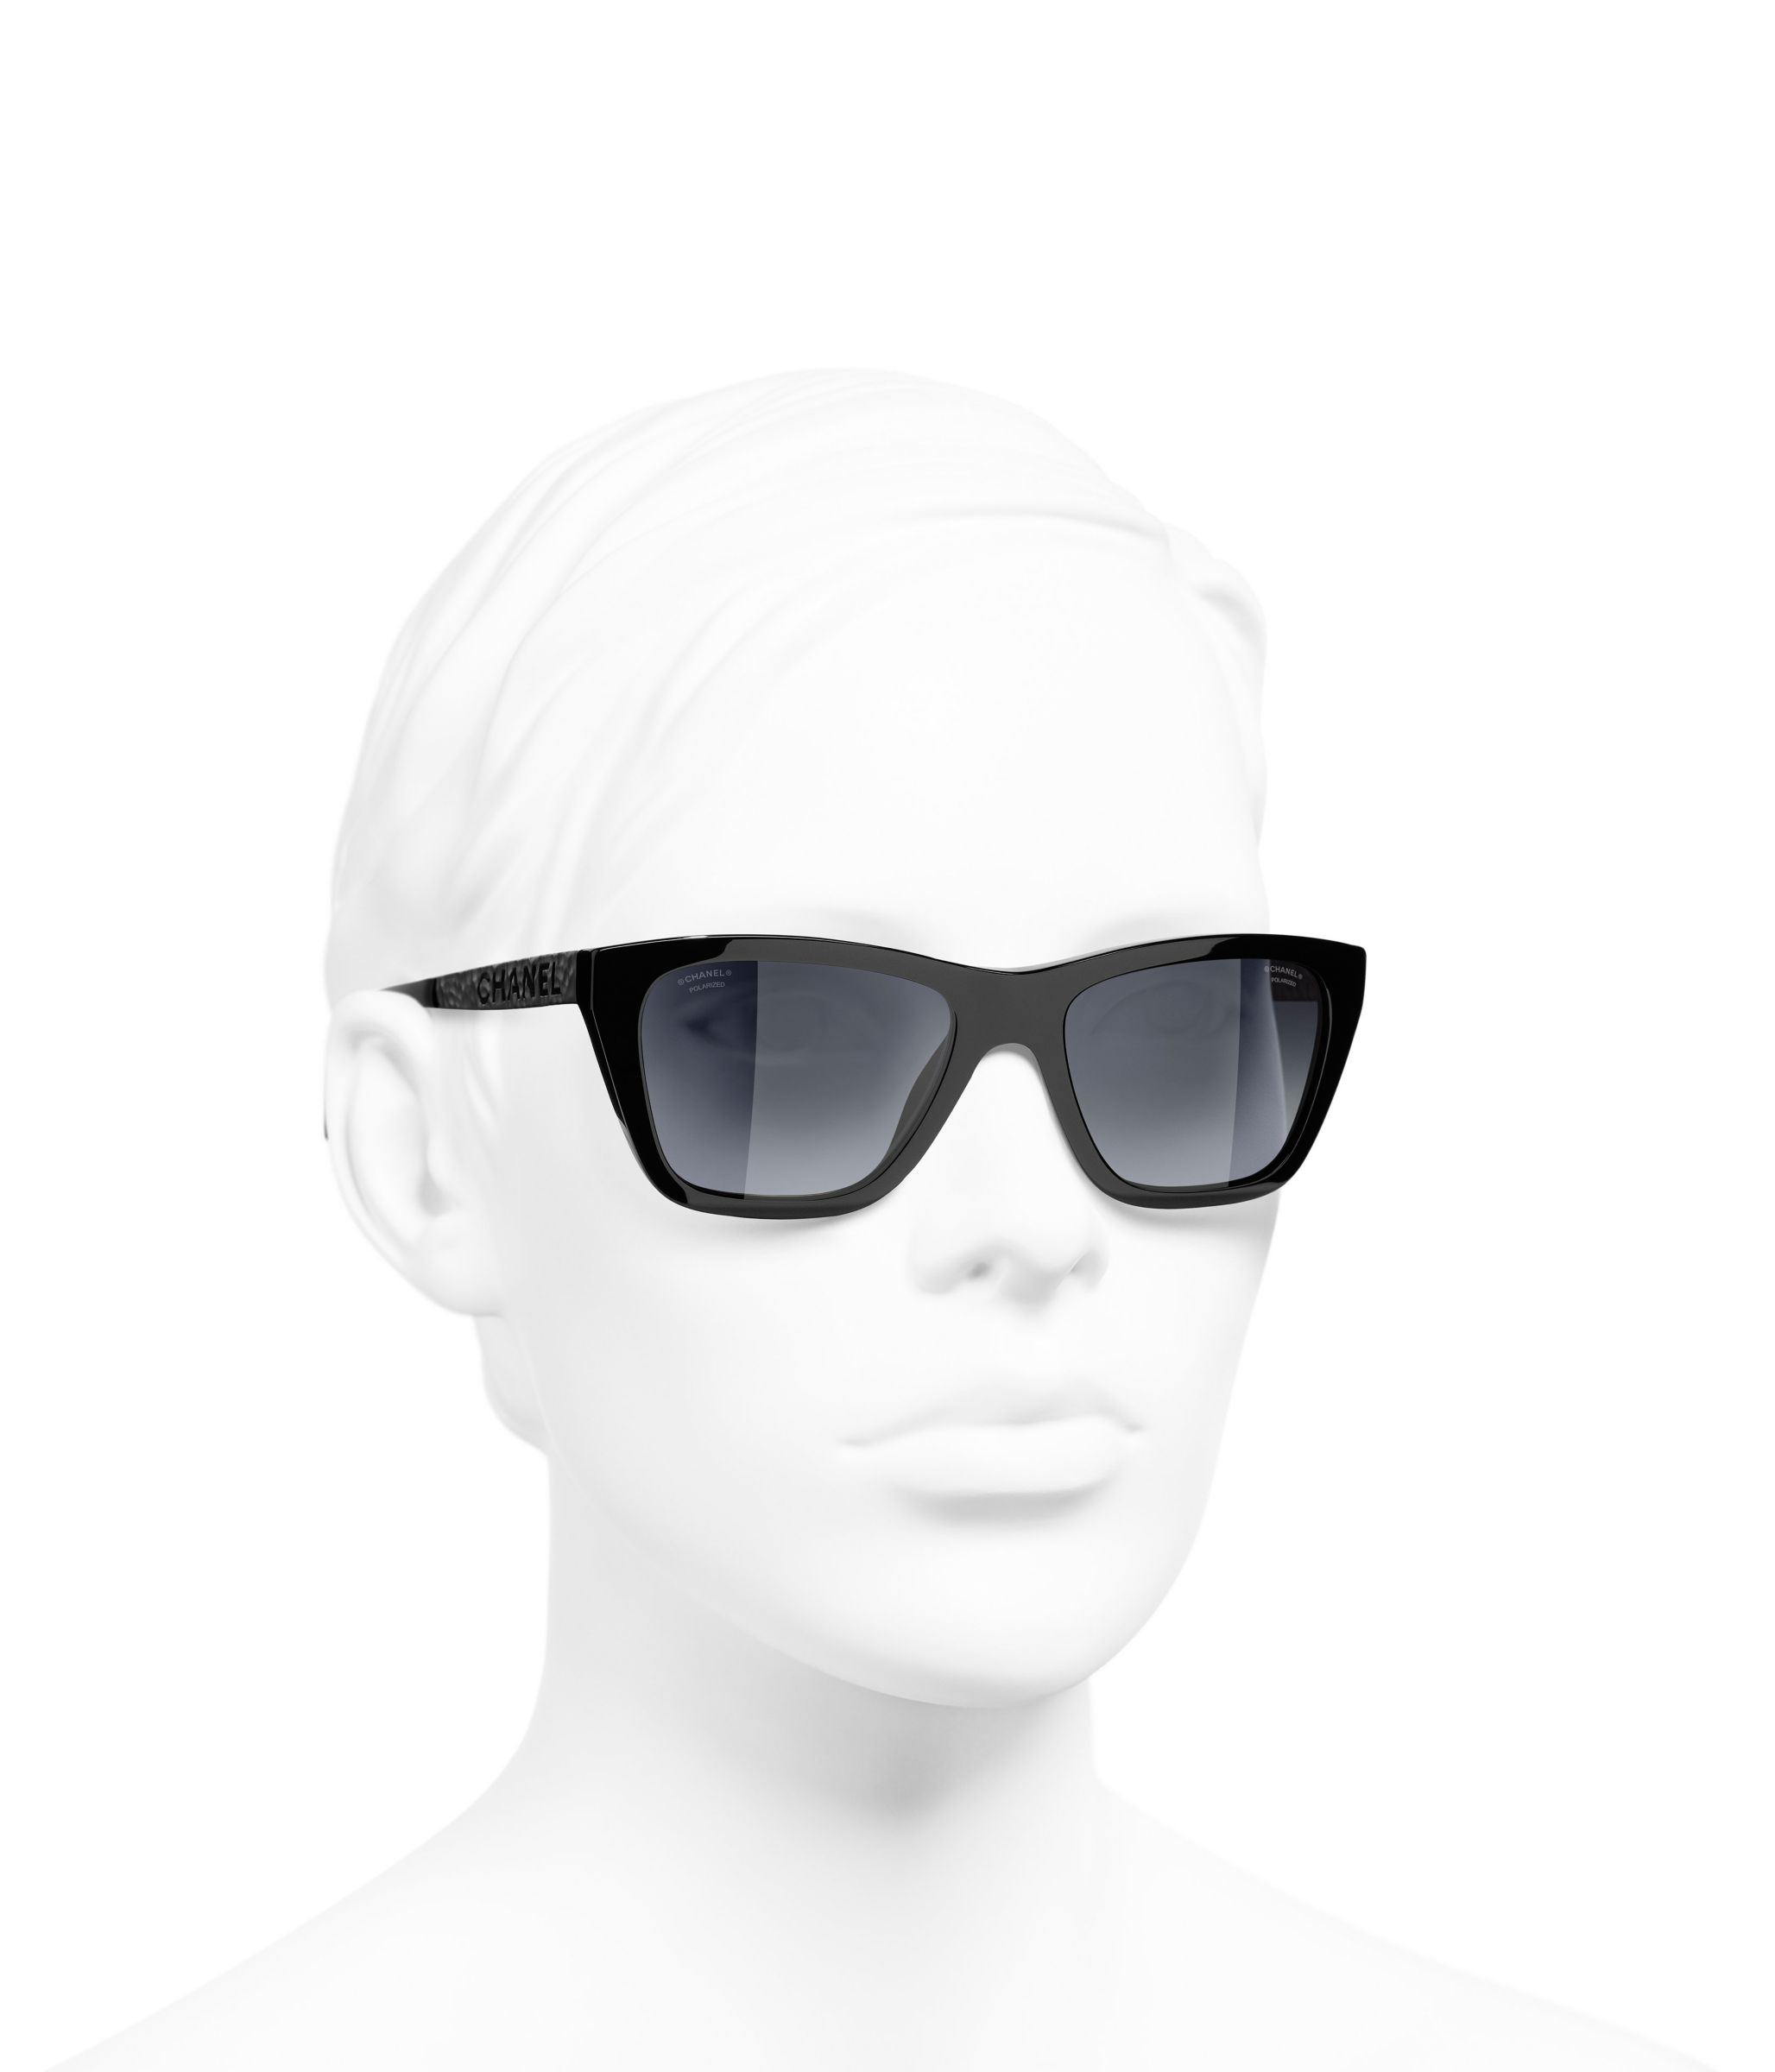 Sunglasses: Rectangle Sunglasses, metal — Fashion | CHANEL